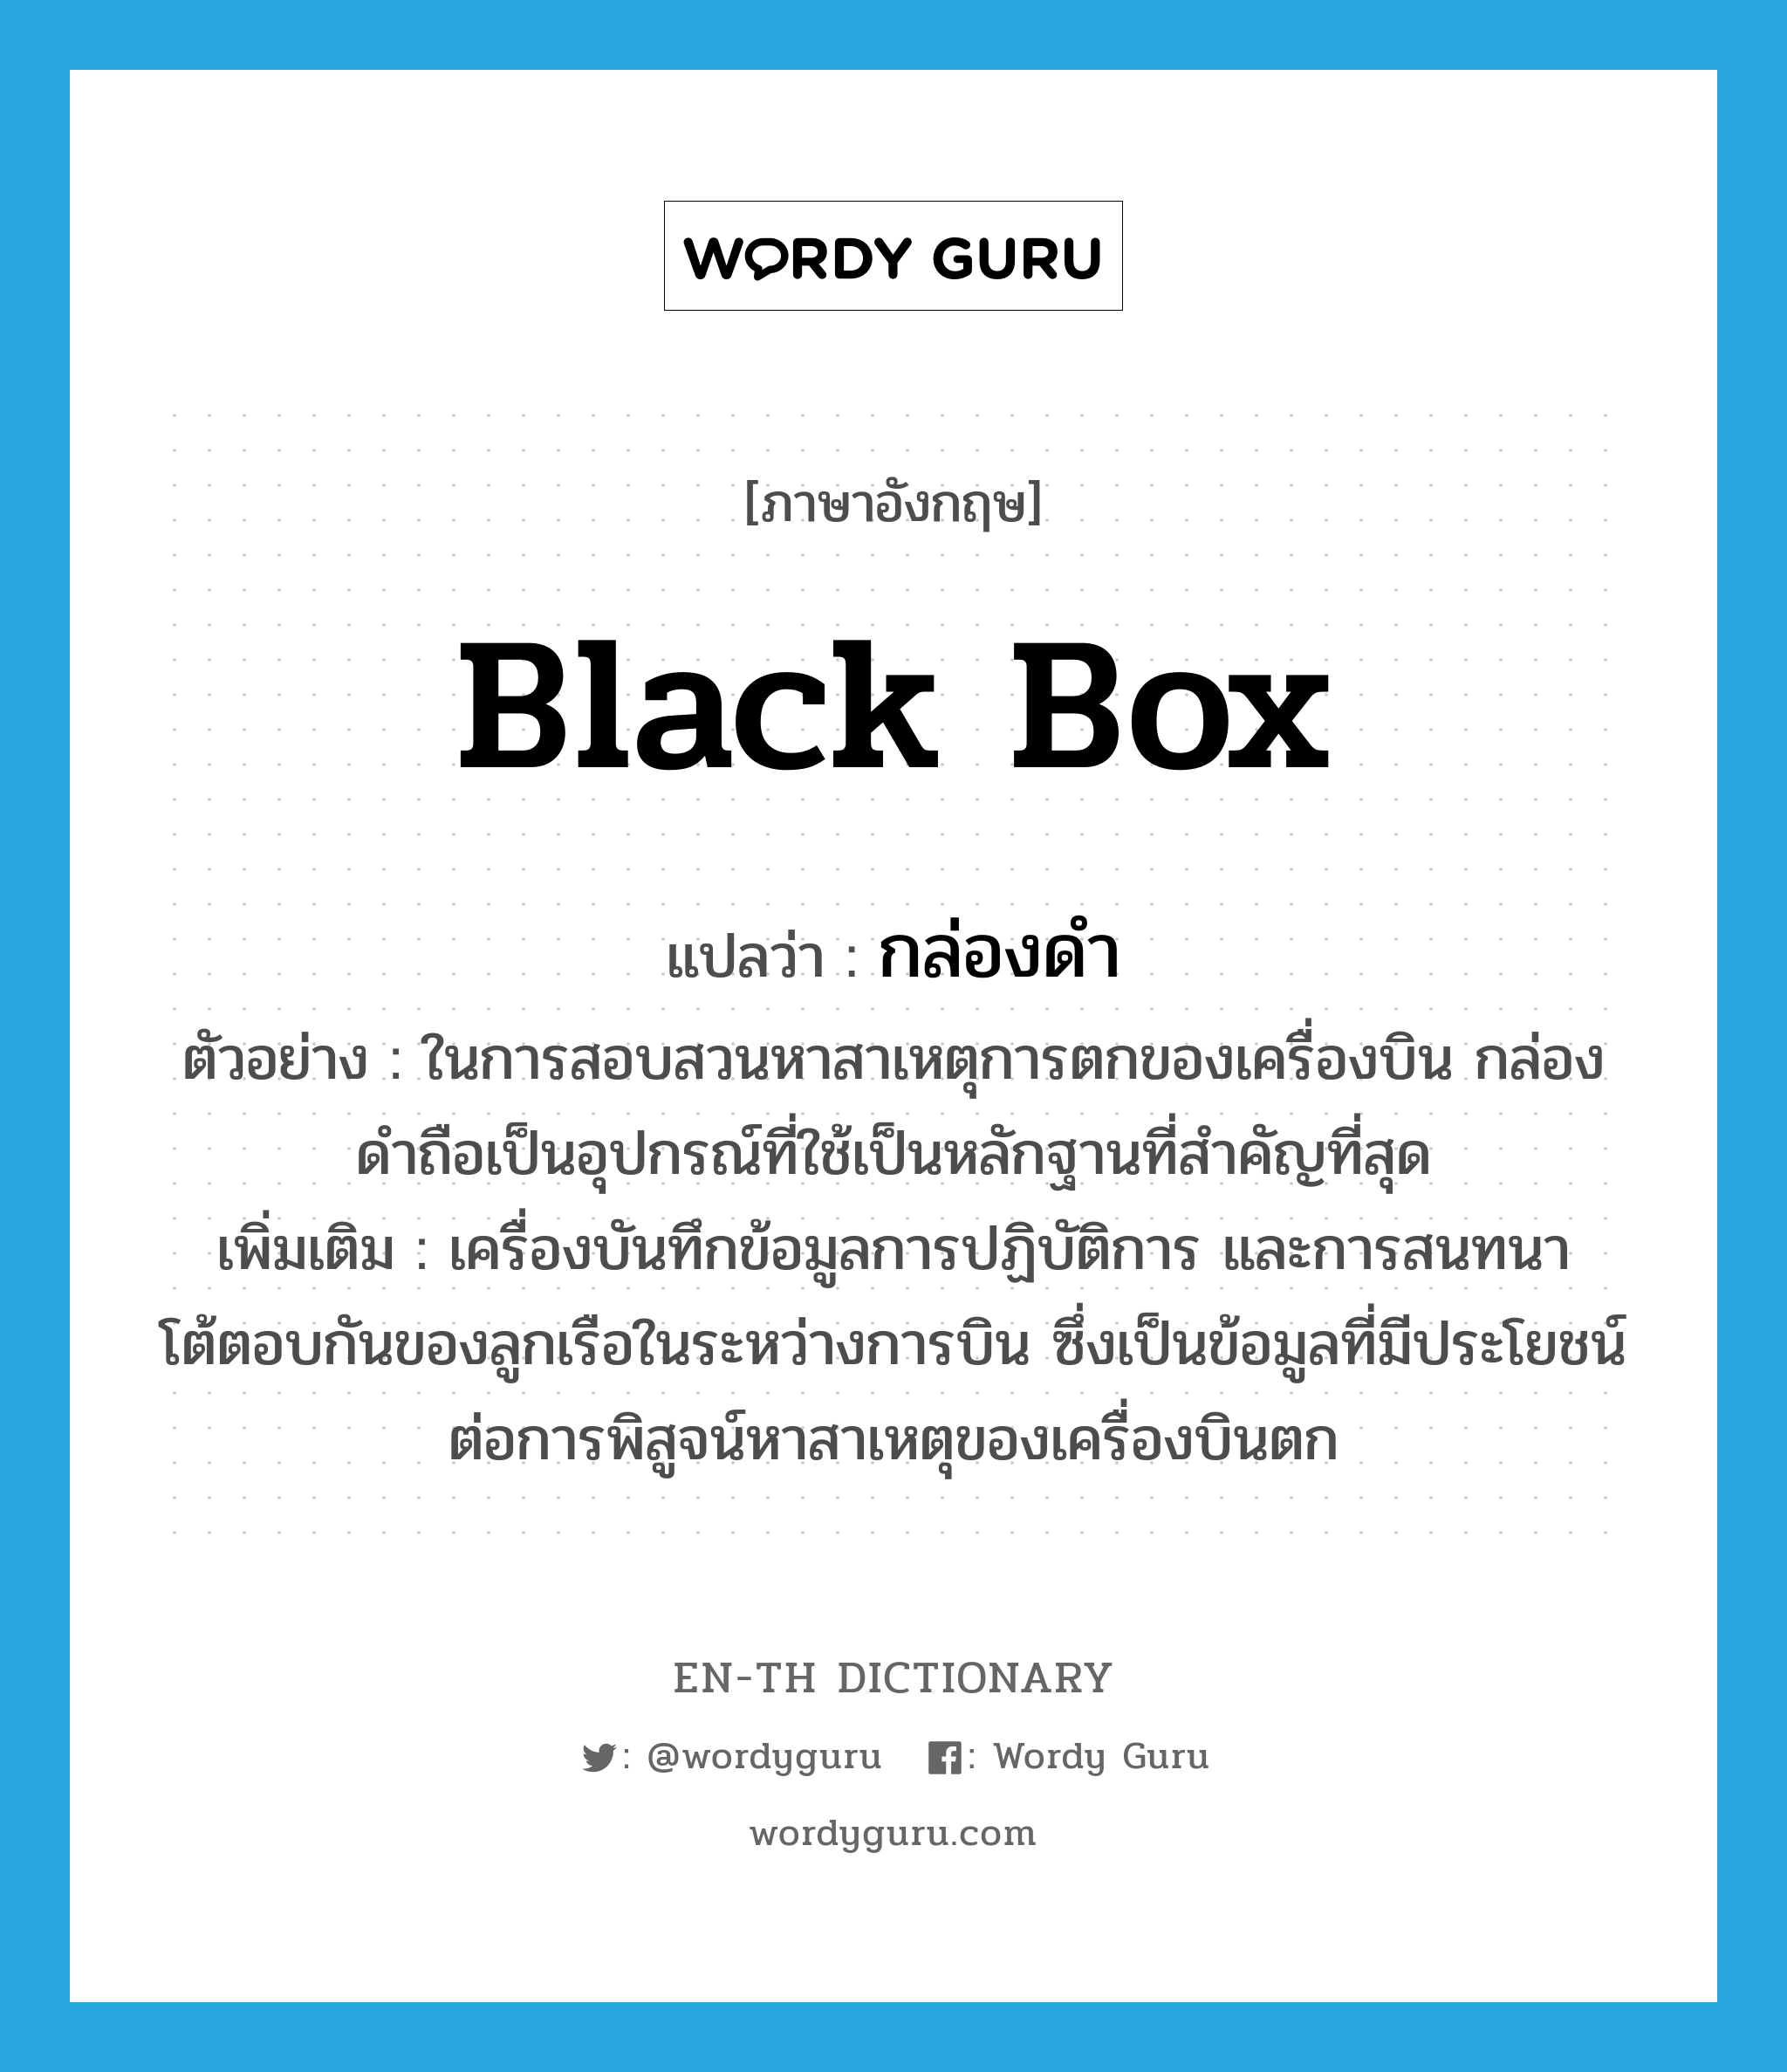 black box แปลว่า?, คำศัพท์ภาษาอังกฤษ black box แปลว่า กล่องดำ ประเภท N ตัวอย่าง ในการสอบสวนหาสาเหตุการตกของเครื่องบิน กล่องดำถือเป็นอุปกรณ์ที่ใช้เป็นหลักฐานที่สำคัญที่สุด เพิ่มเติม เครื่องบันทึกข้อมูลการปฏิบัติการ และการสนทนาโต้ตอบกันของลูกเรือในระหว่างการบิน ซึ่งเป็นข้อมูลที่มีประโยชน์ต่อการพิสูจน์หาสาเหตุของเครื่องบินตก หมวด N